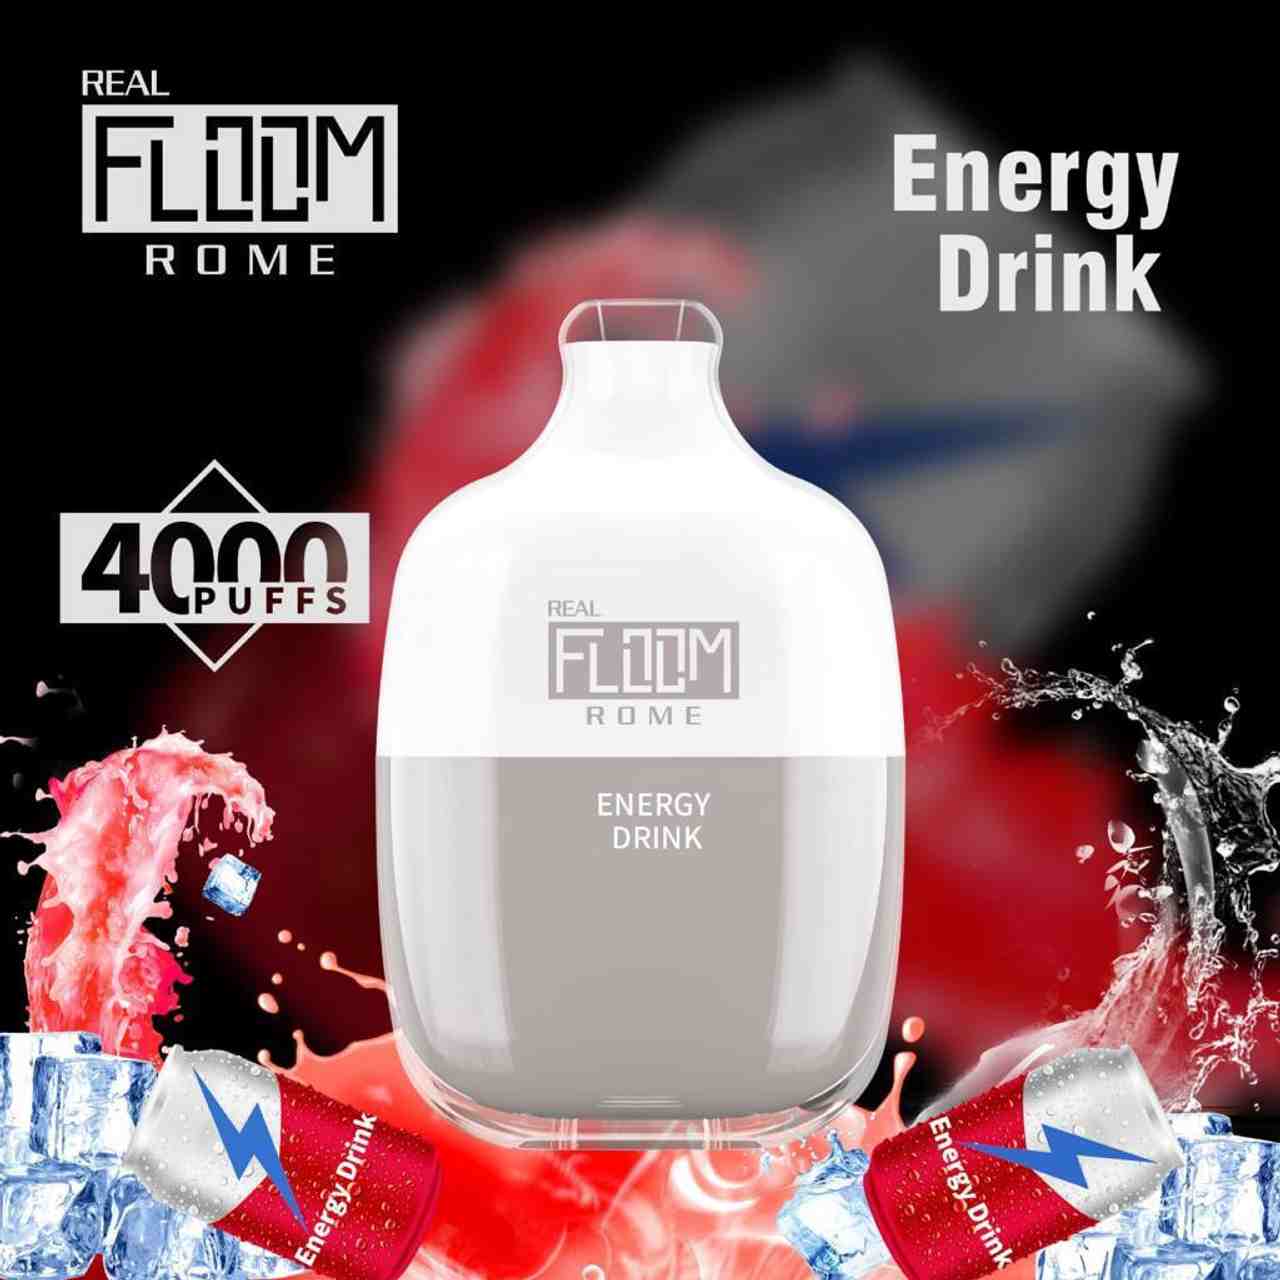 Floom Rome Energy Drink